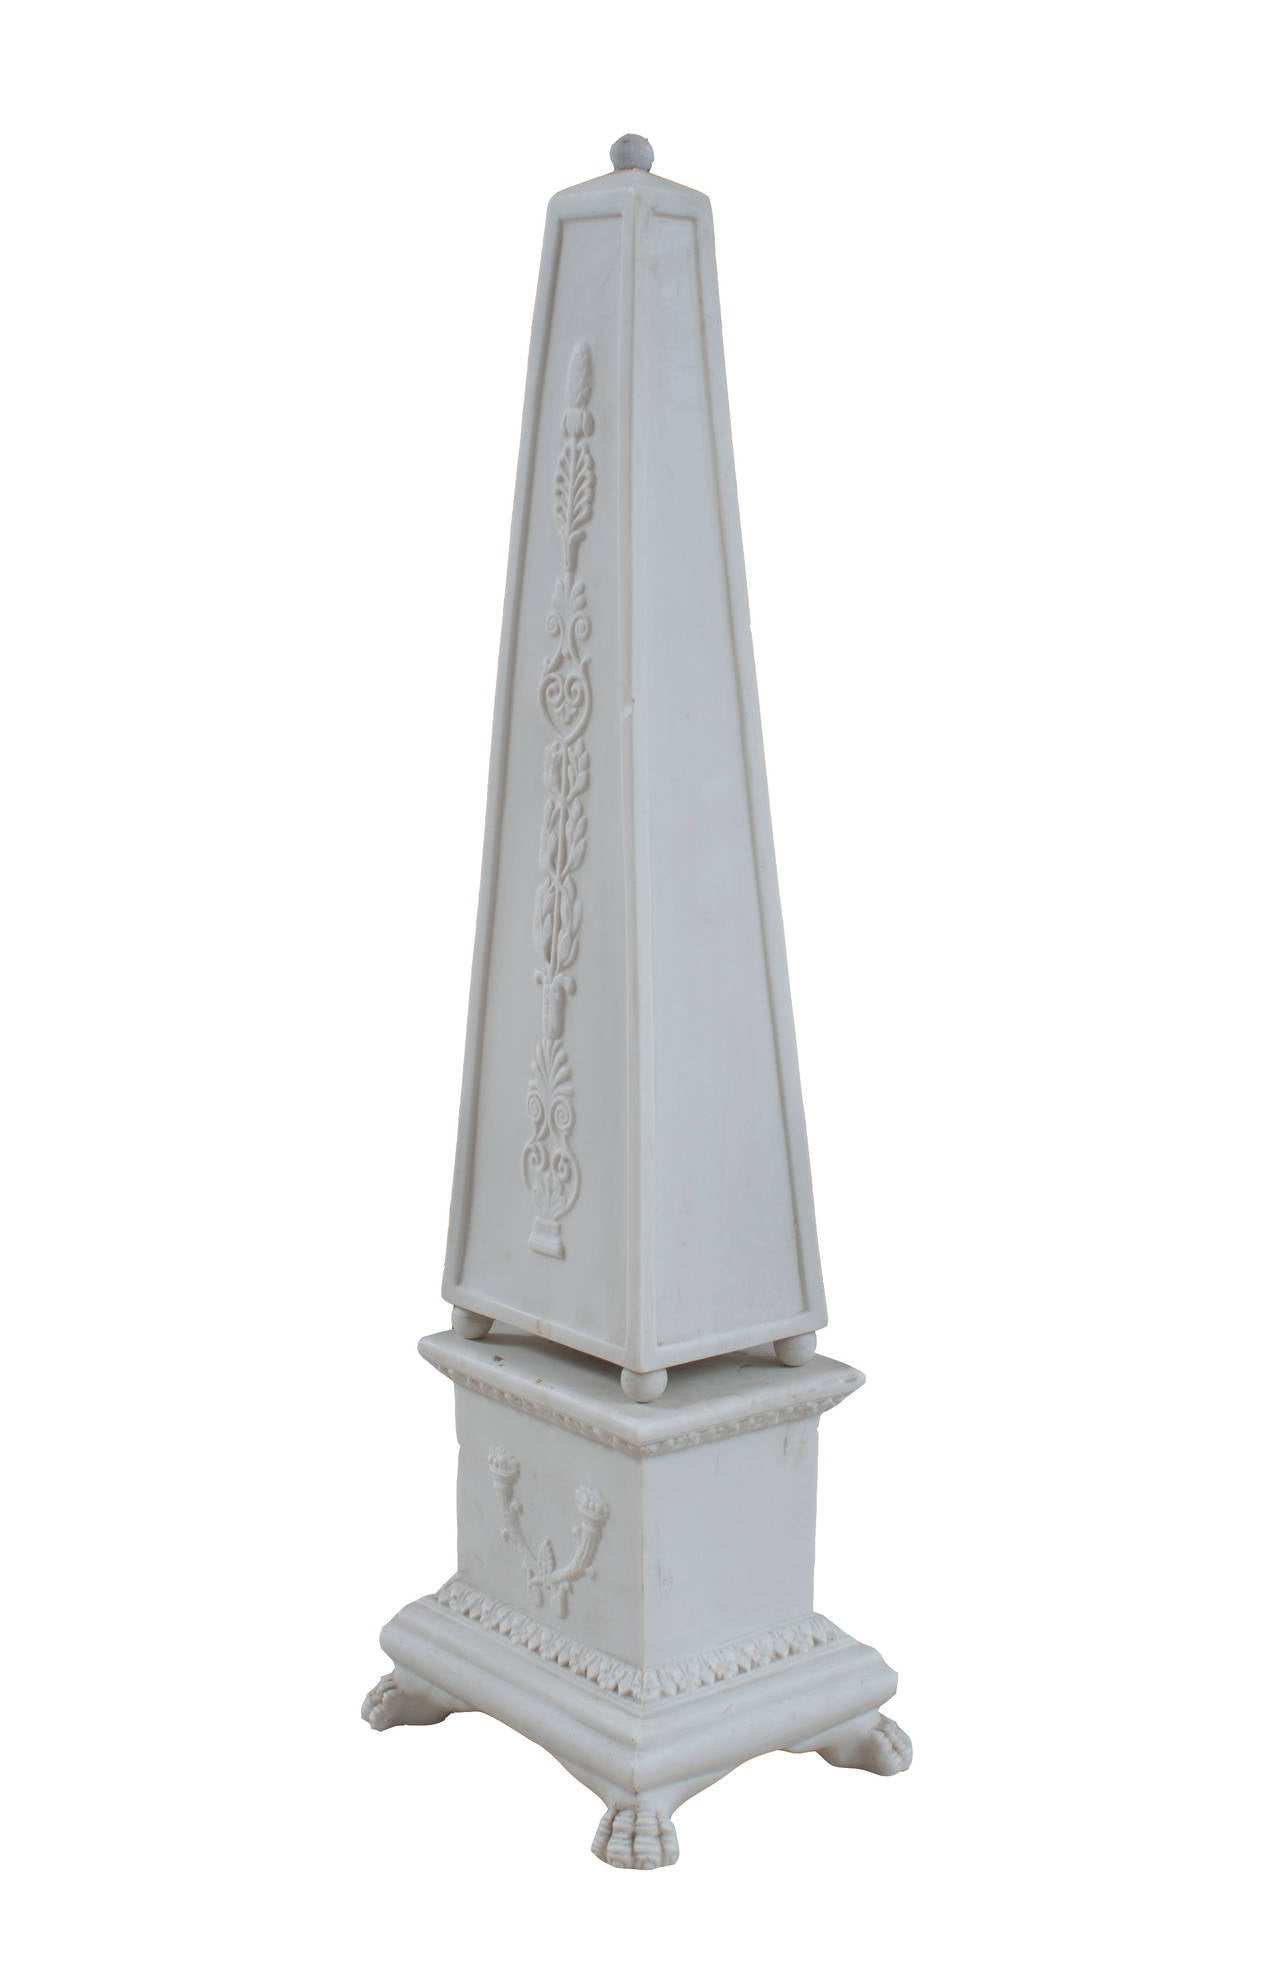 Pair of white porcelain Obelisks with side decorations matte finish.